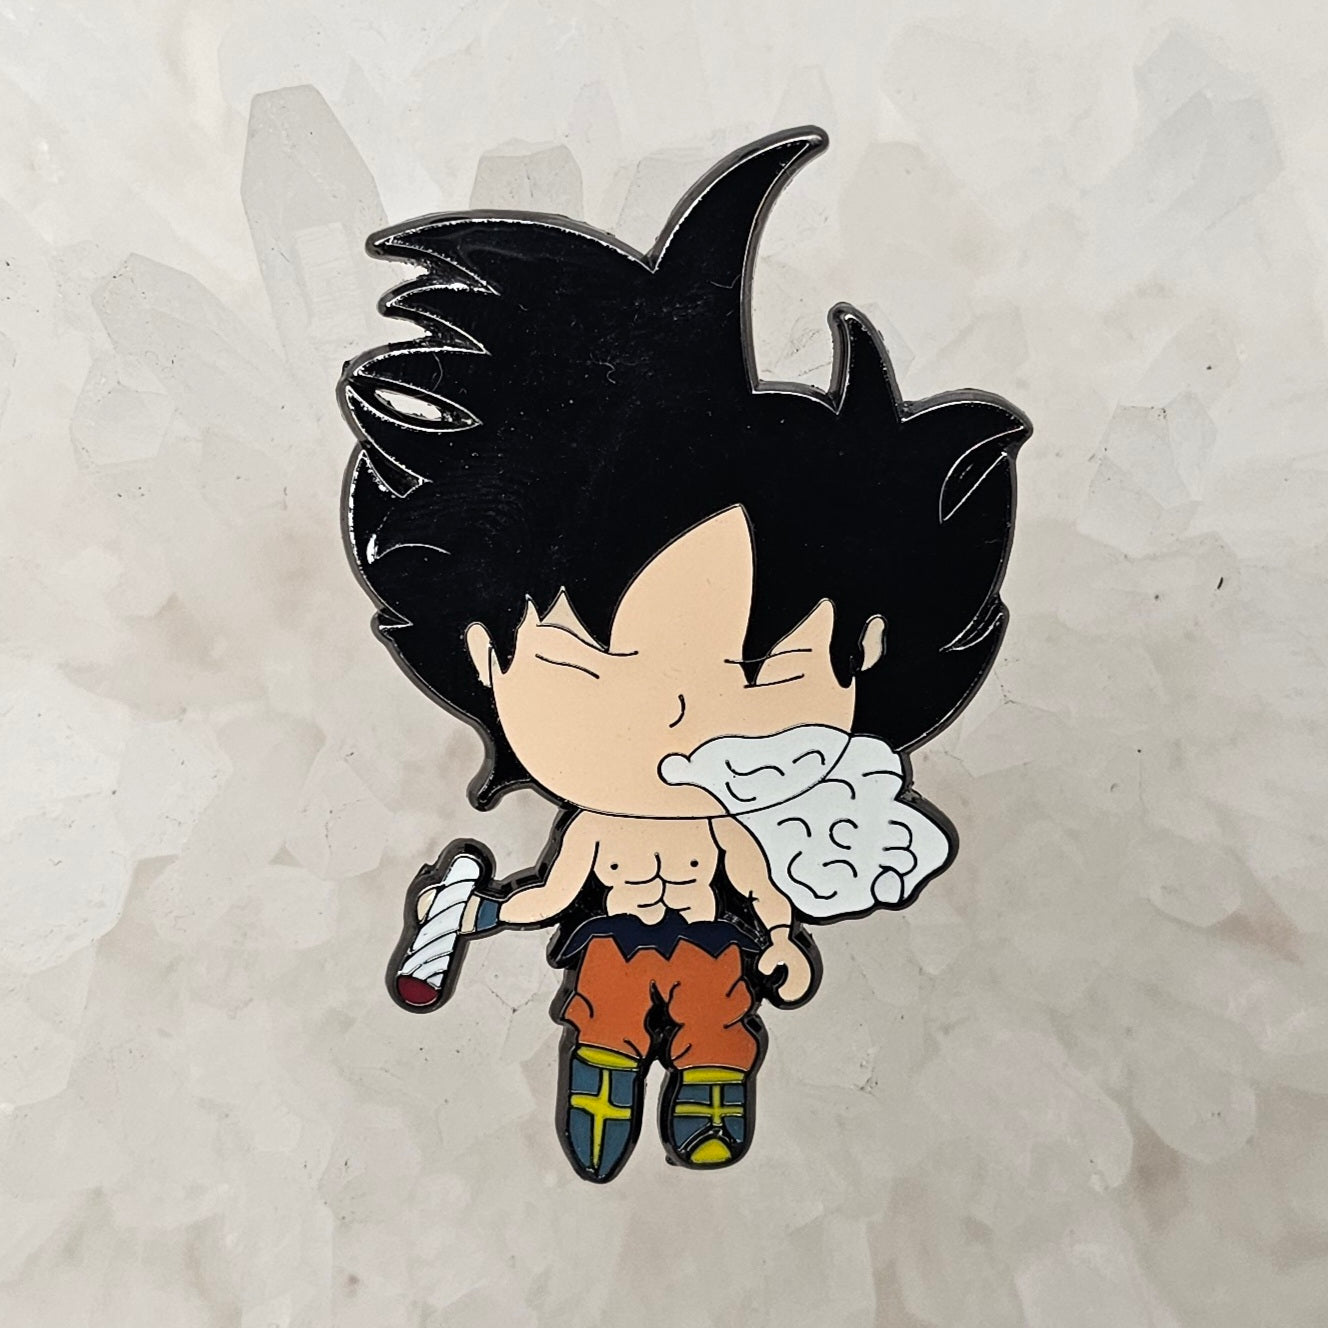 Stoner Goku Weed Dbz Dragon Anime Ball Z Manga 90s Cartoon Enamel Pins Hat Pins Lapel Pin Brooch Badge Festival Pin